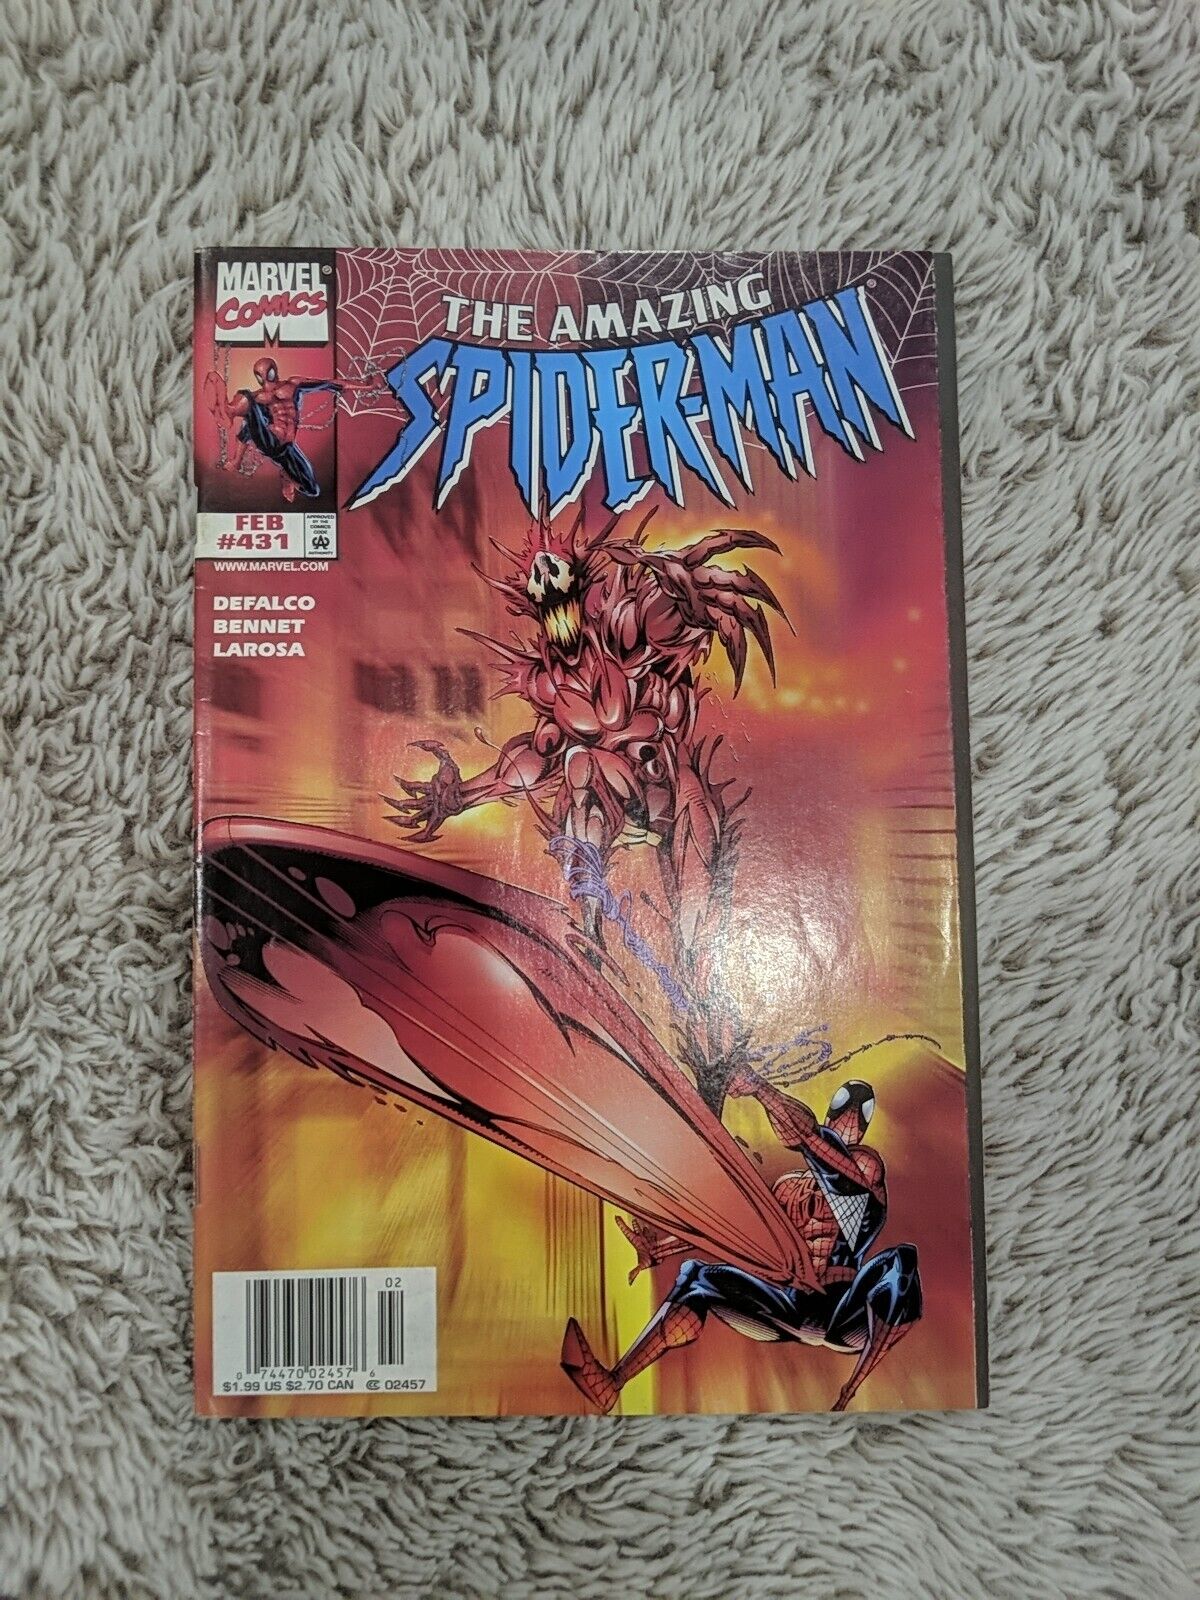 The Amazing Spider-Man #431 Volume 1 1998 Marvel Comics